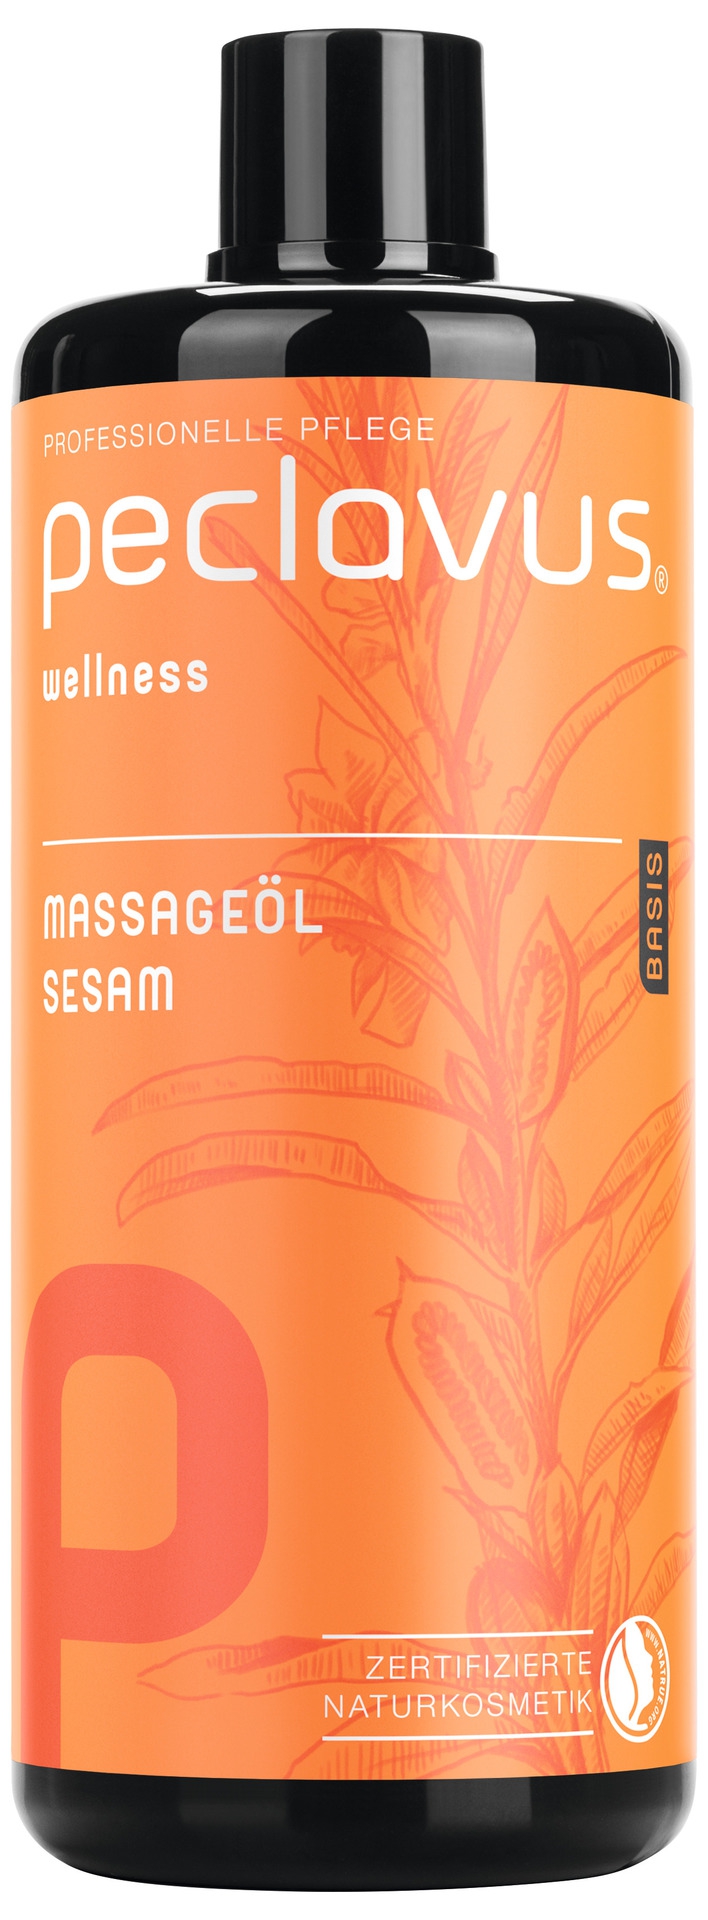 PECLAVUS Massageöl Sesam 500 ml | Basis